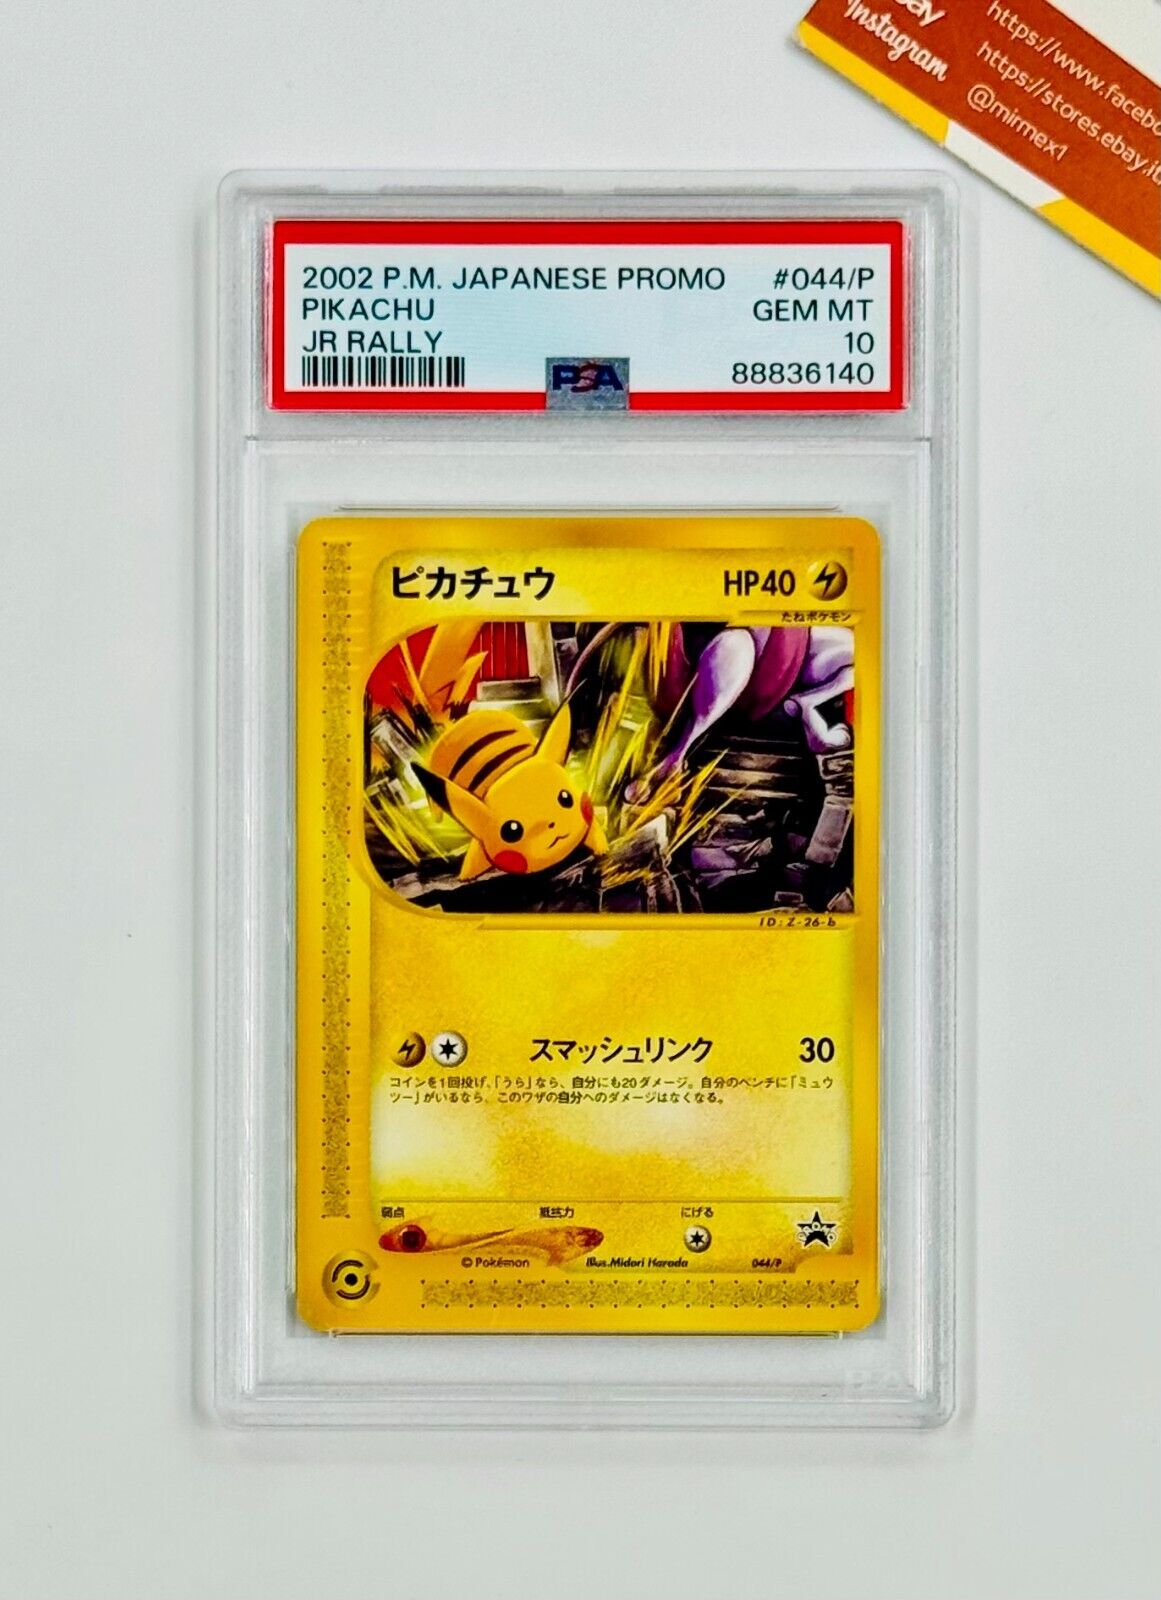 Pokemon PSA 10 Pikachu #044/P JR Rally Promo 2002 Japanese